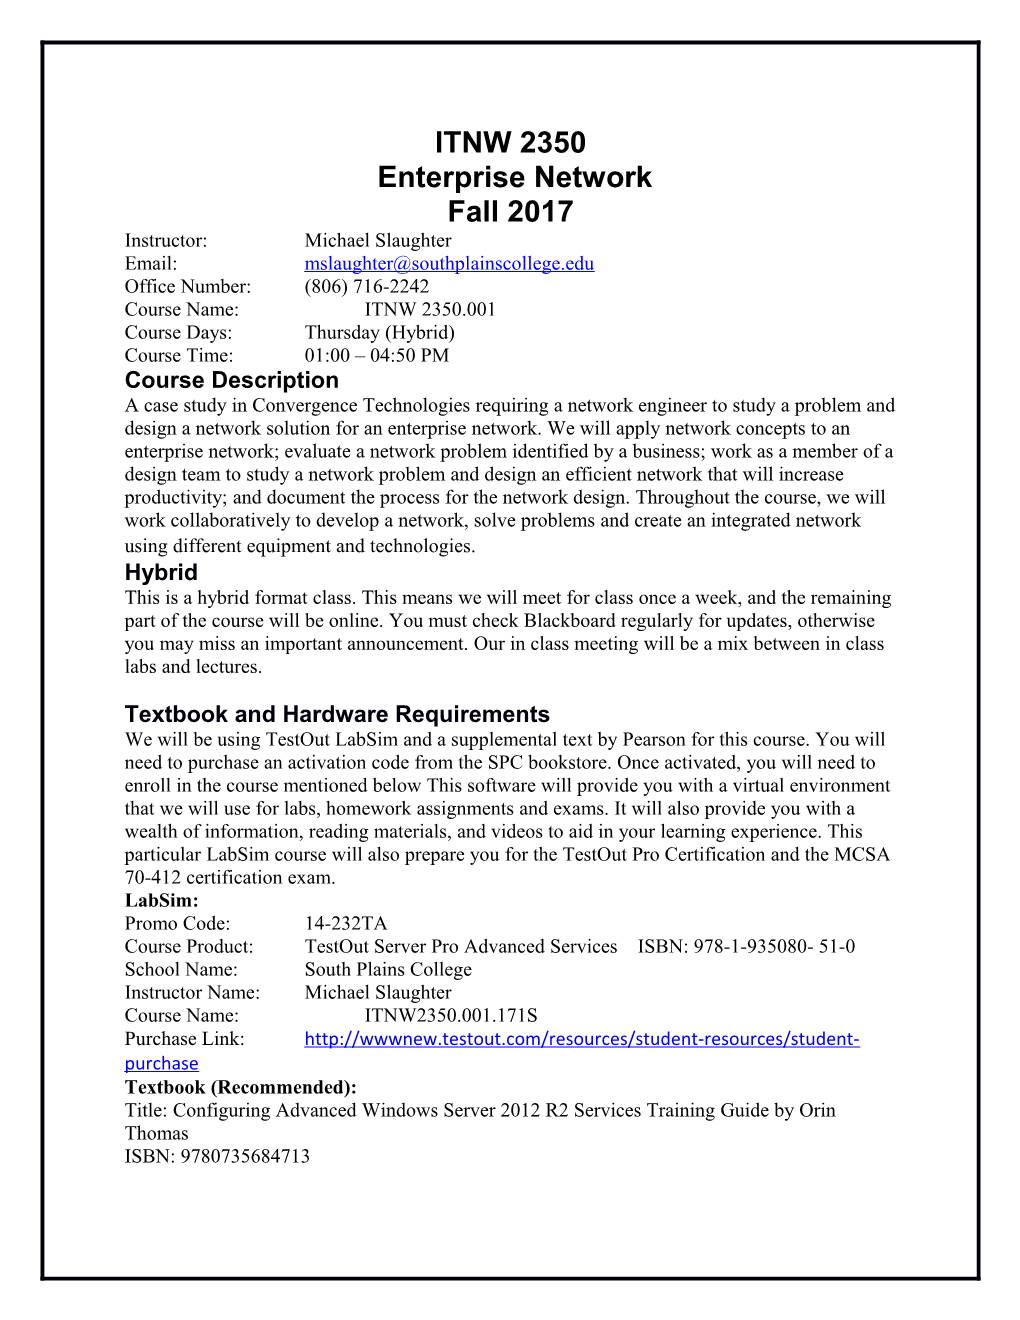 ITNW 2350 Enterprise Network Fall 2017